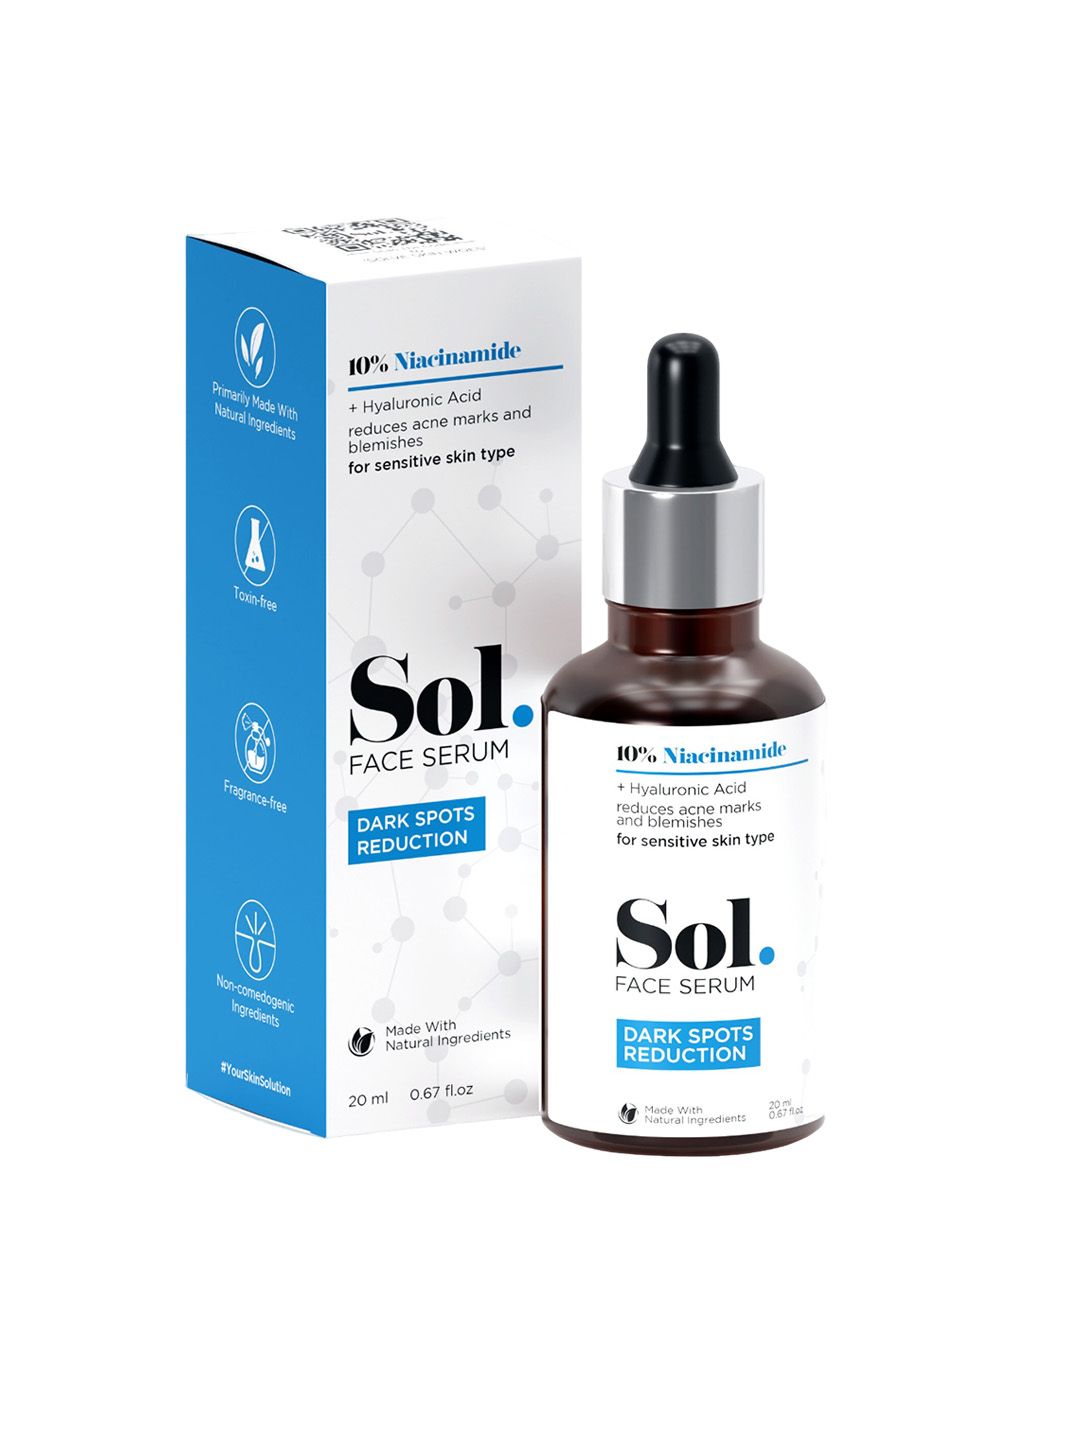 Sol. 10% Niacinamide Dark Spots Reduction Face Serum - 20ml